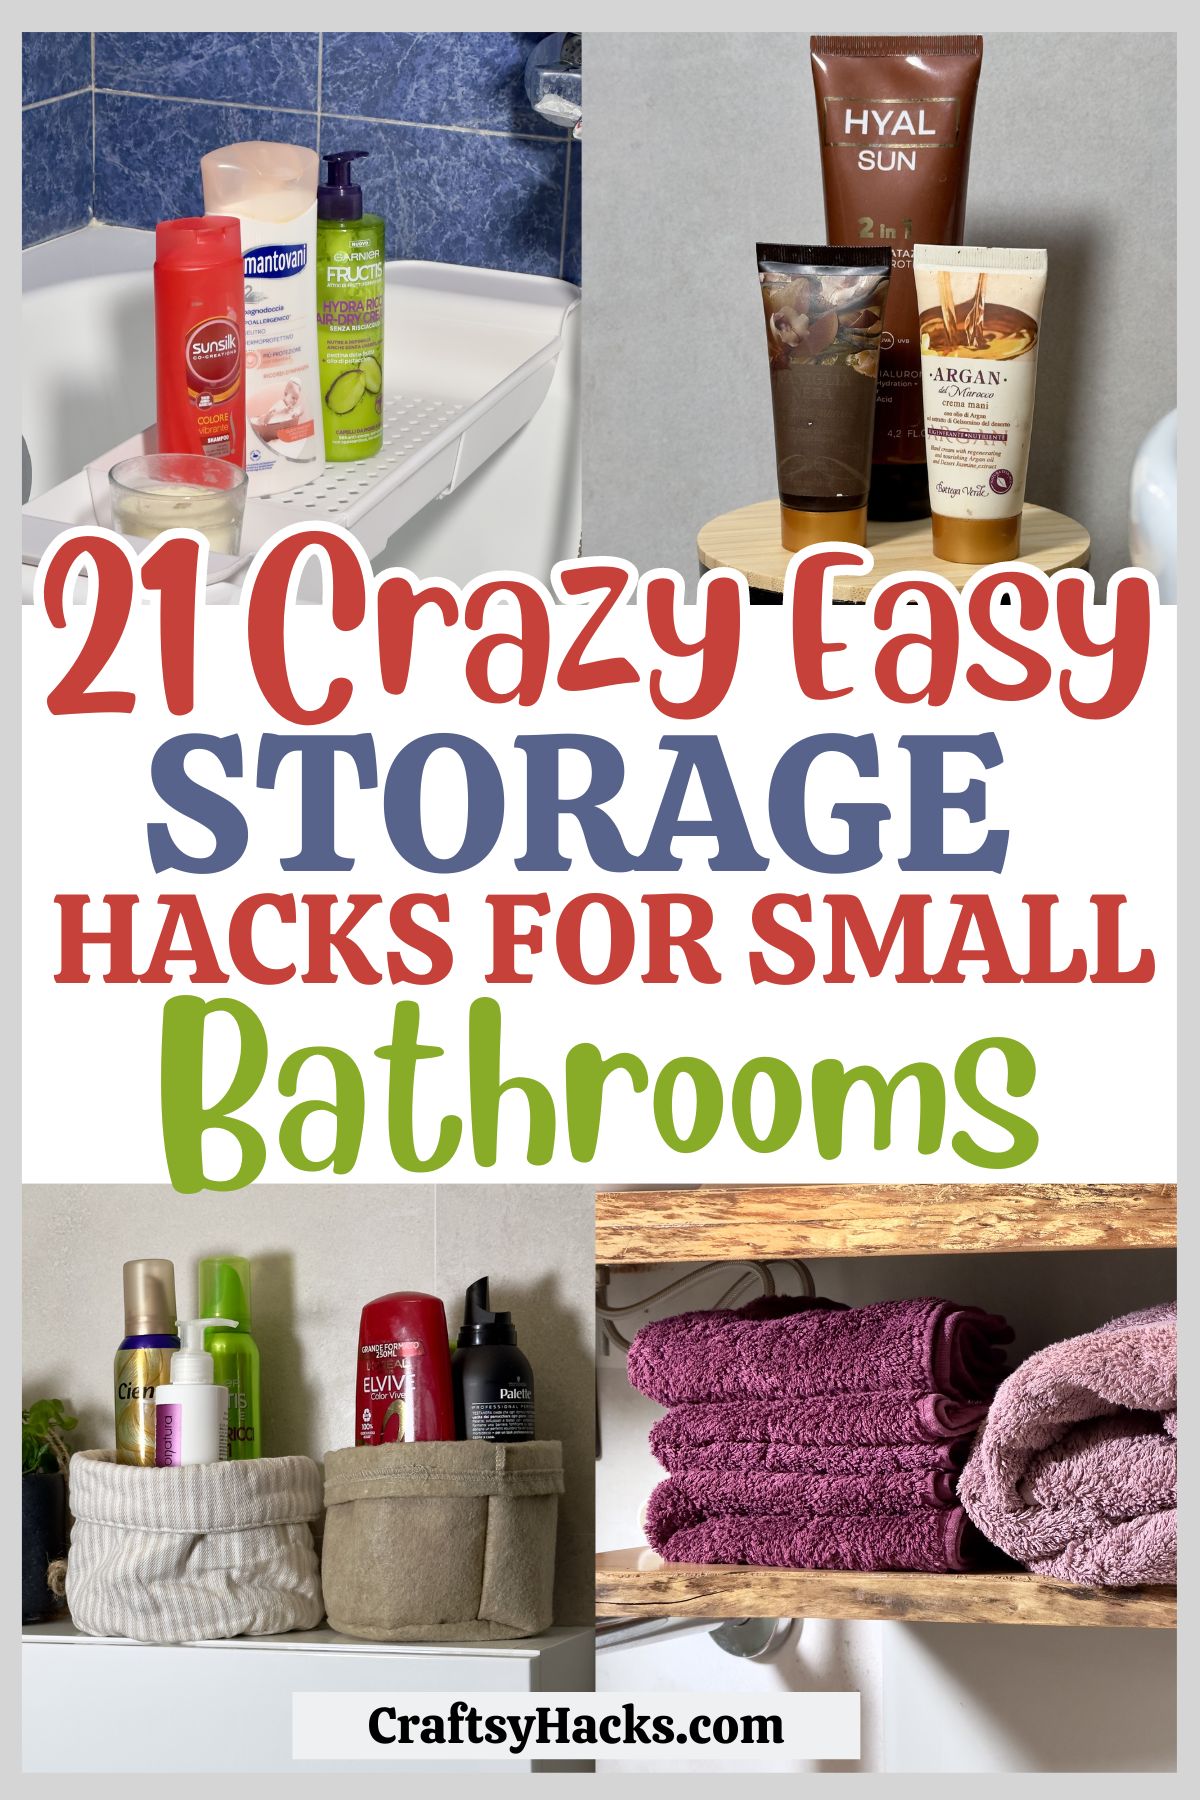  easy Storage hacks for bathrooms